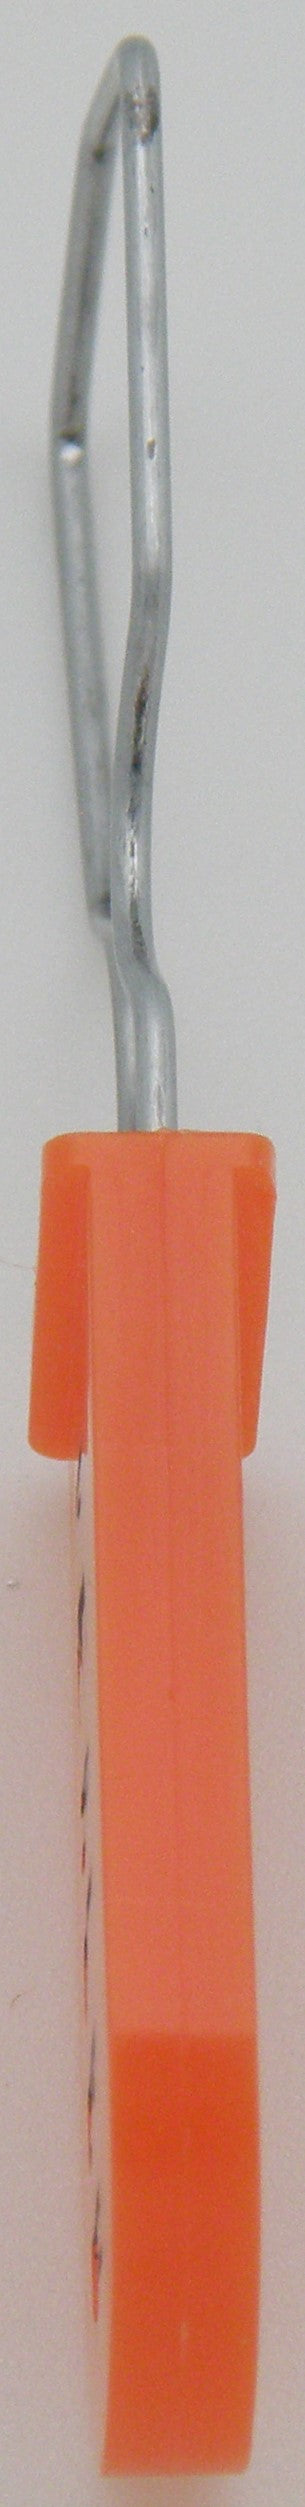 Metal Wire Padlock Security Lockout Tagout Seal Pack of 1000 Orange